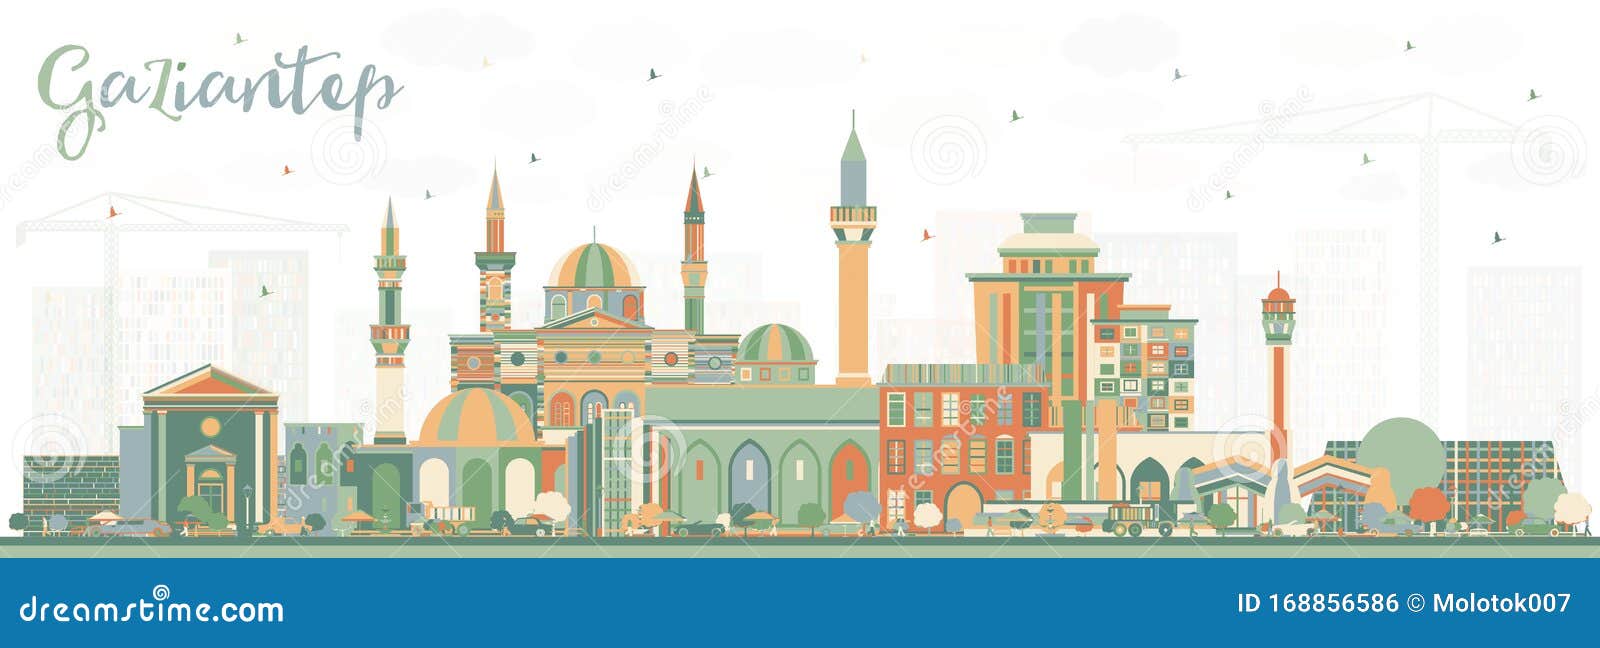 gaziantep turkey city skyline with color buildings